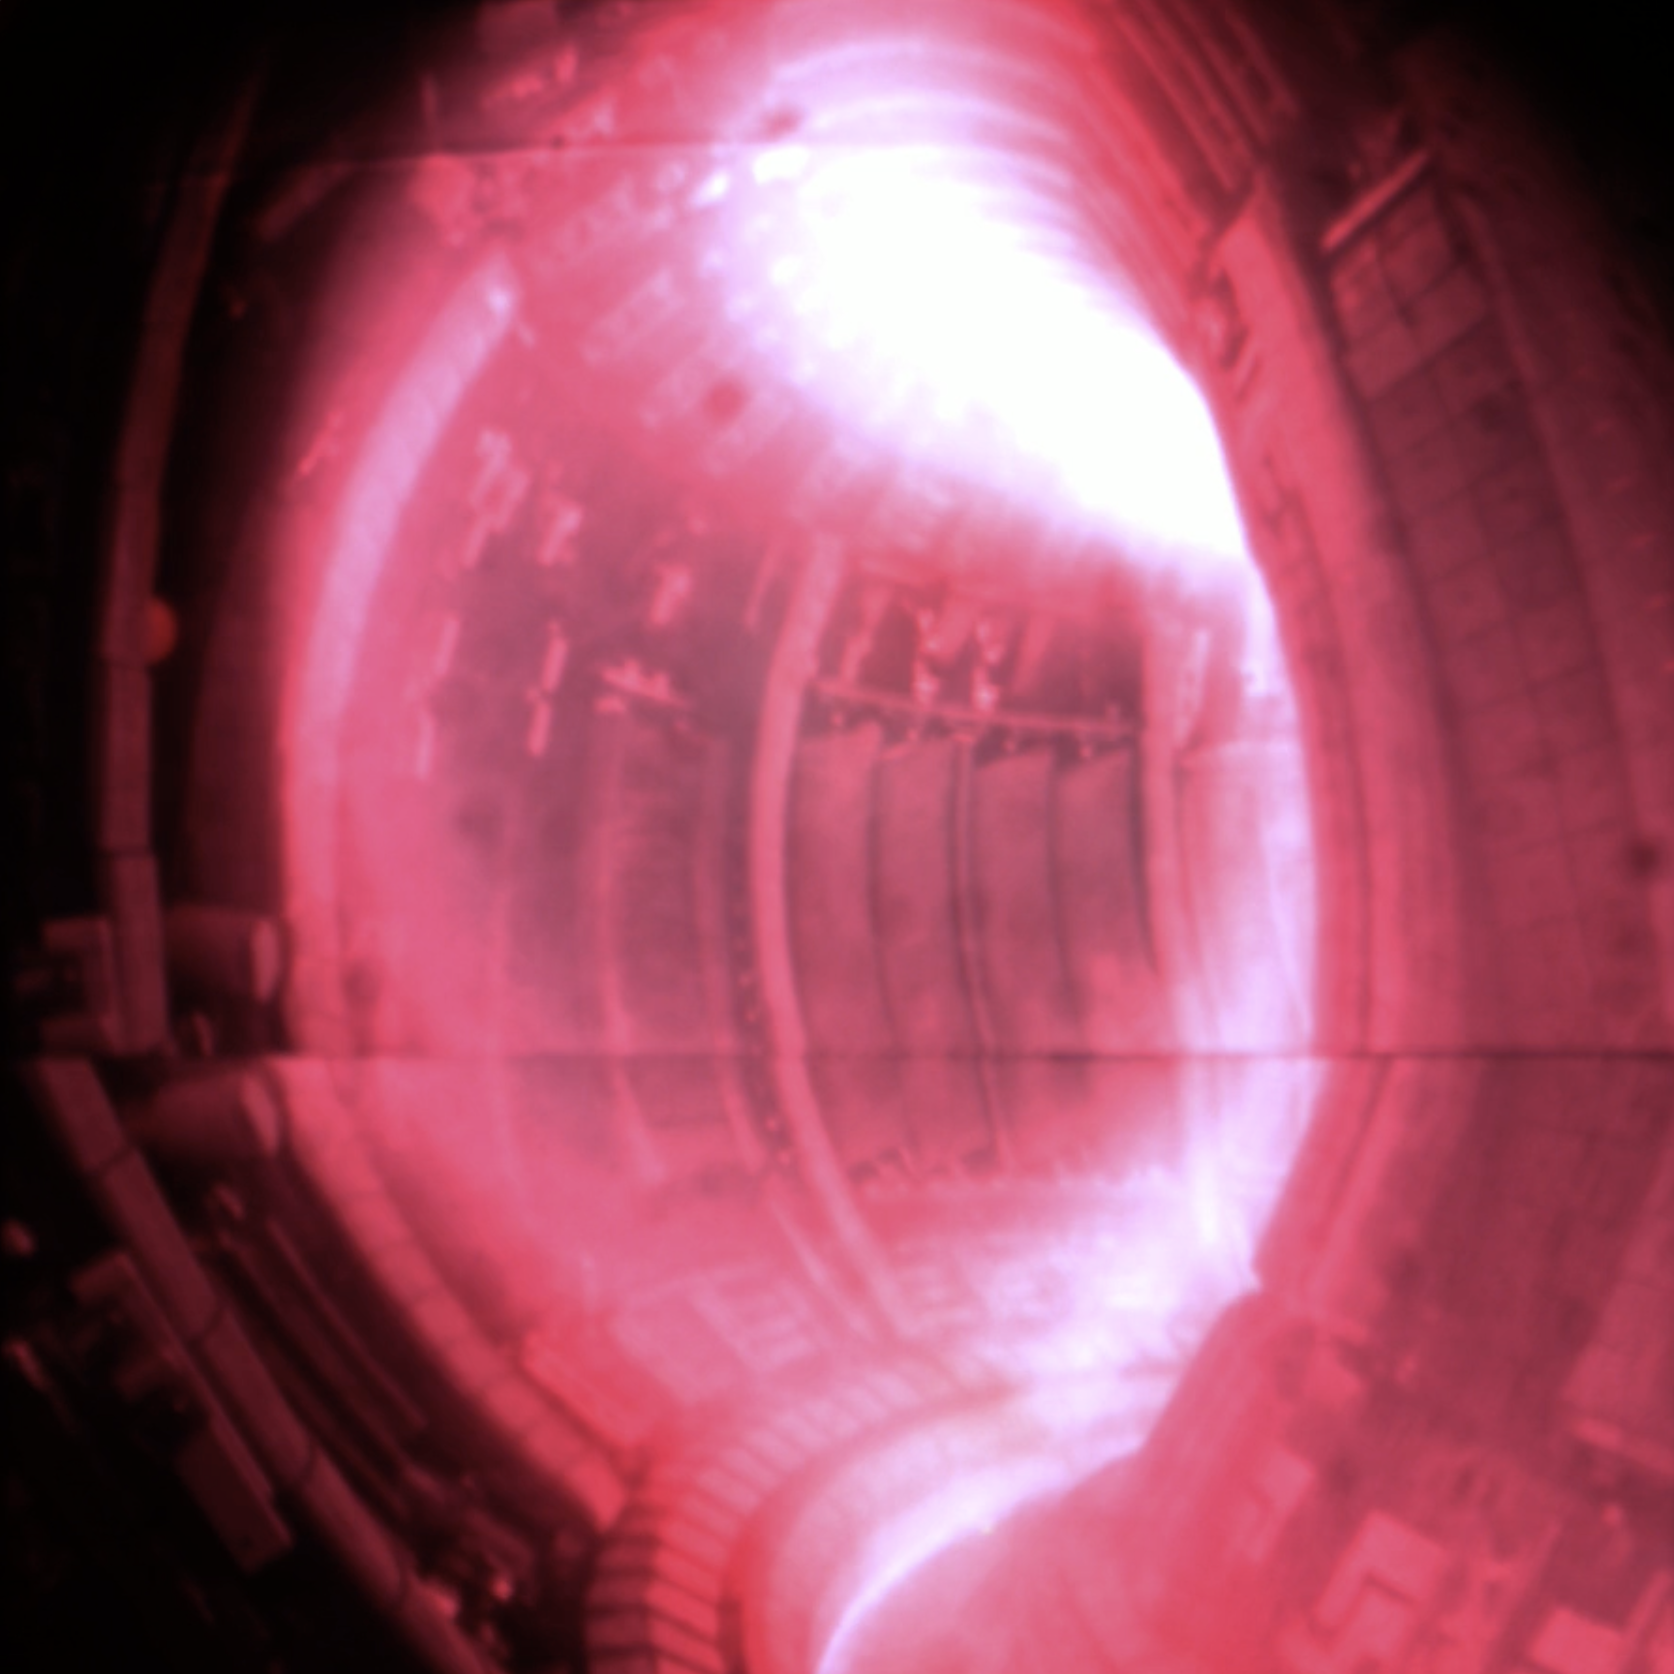 uk-lab-sets-fusion-world-record-superinnovators